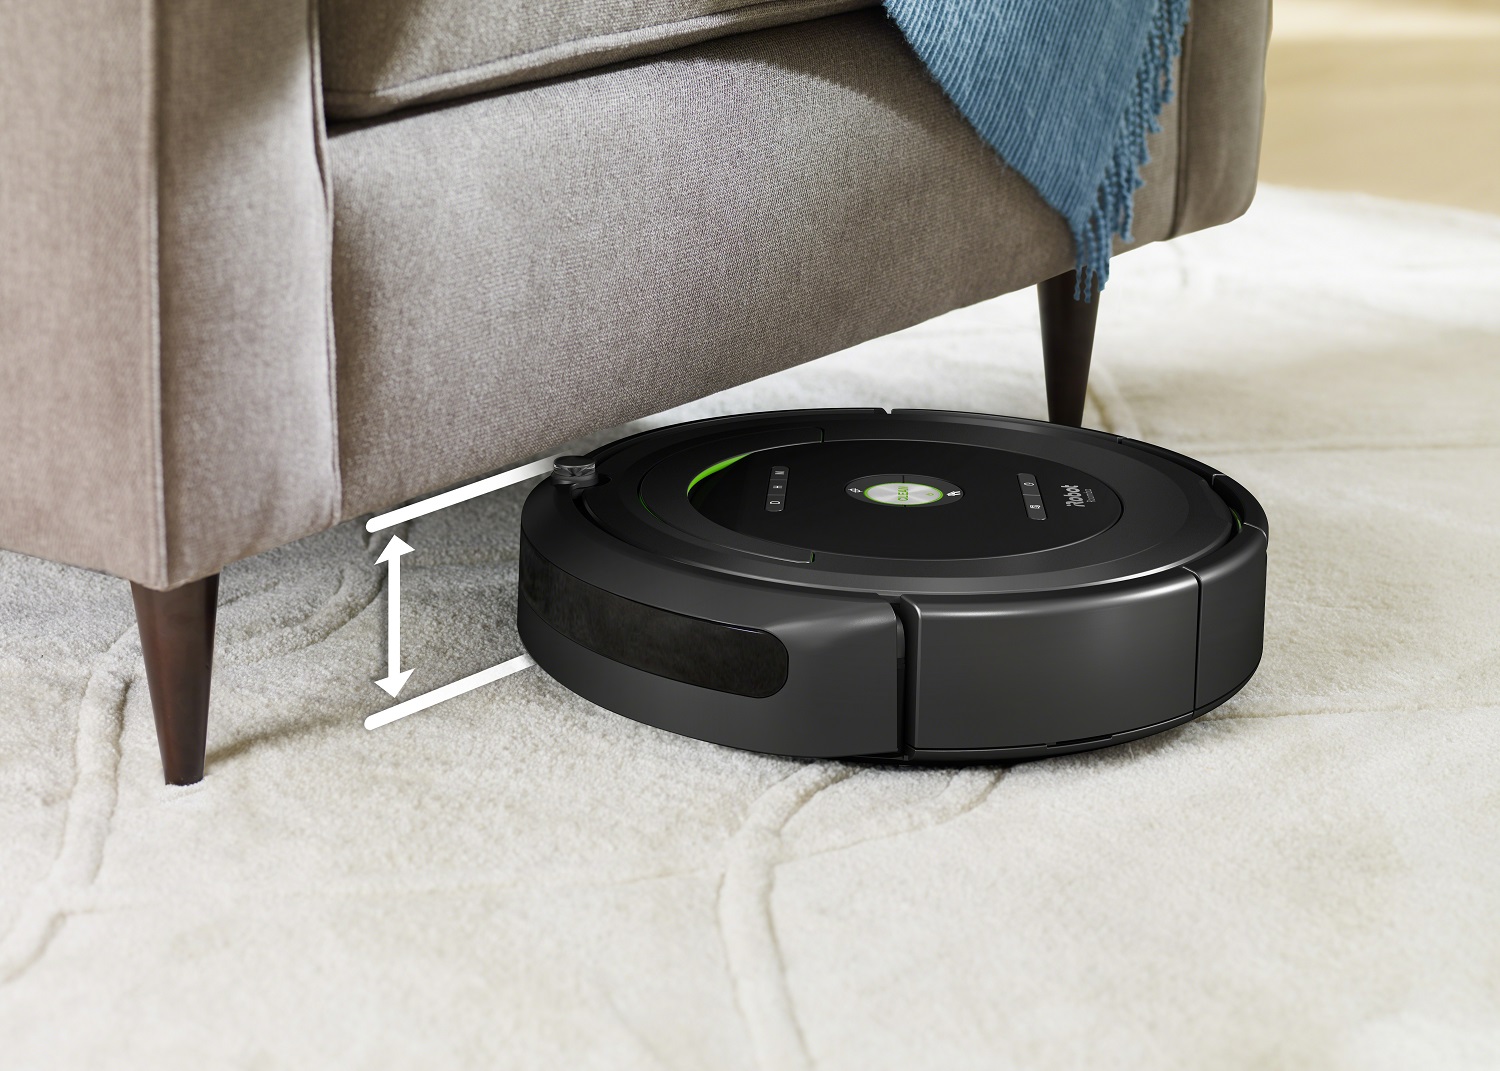 Best iRobot Roomba deals for July 2022